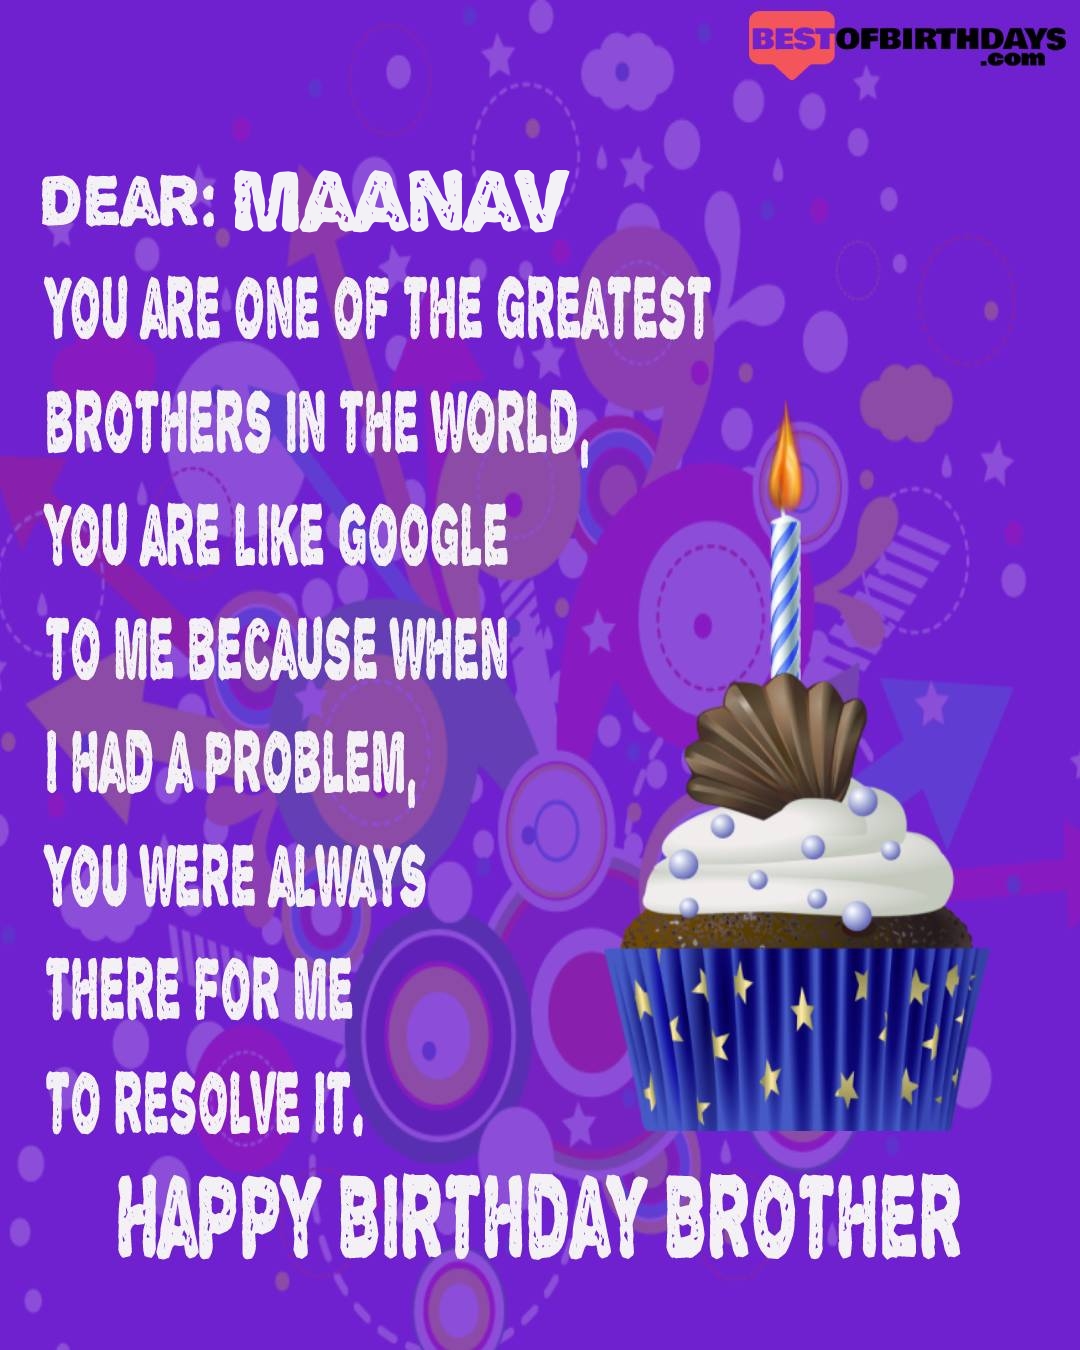 Happy birthday maanav bhai brother bro